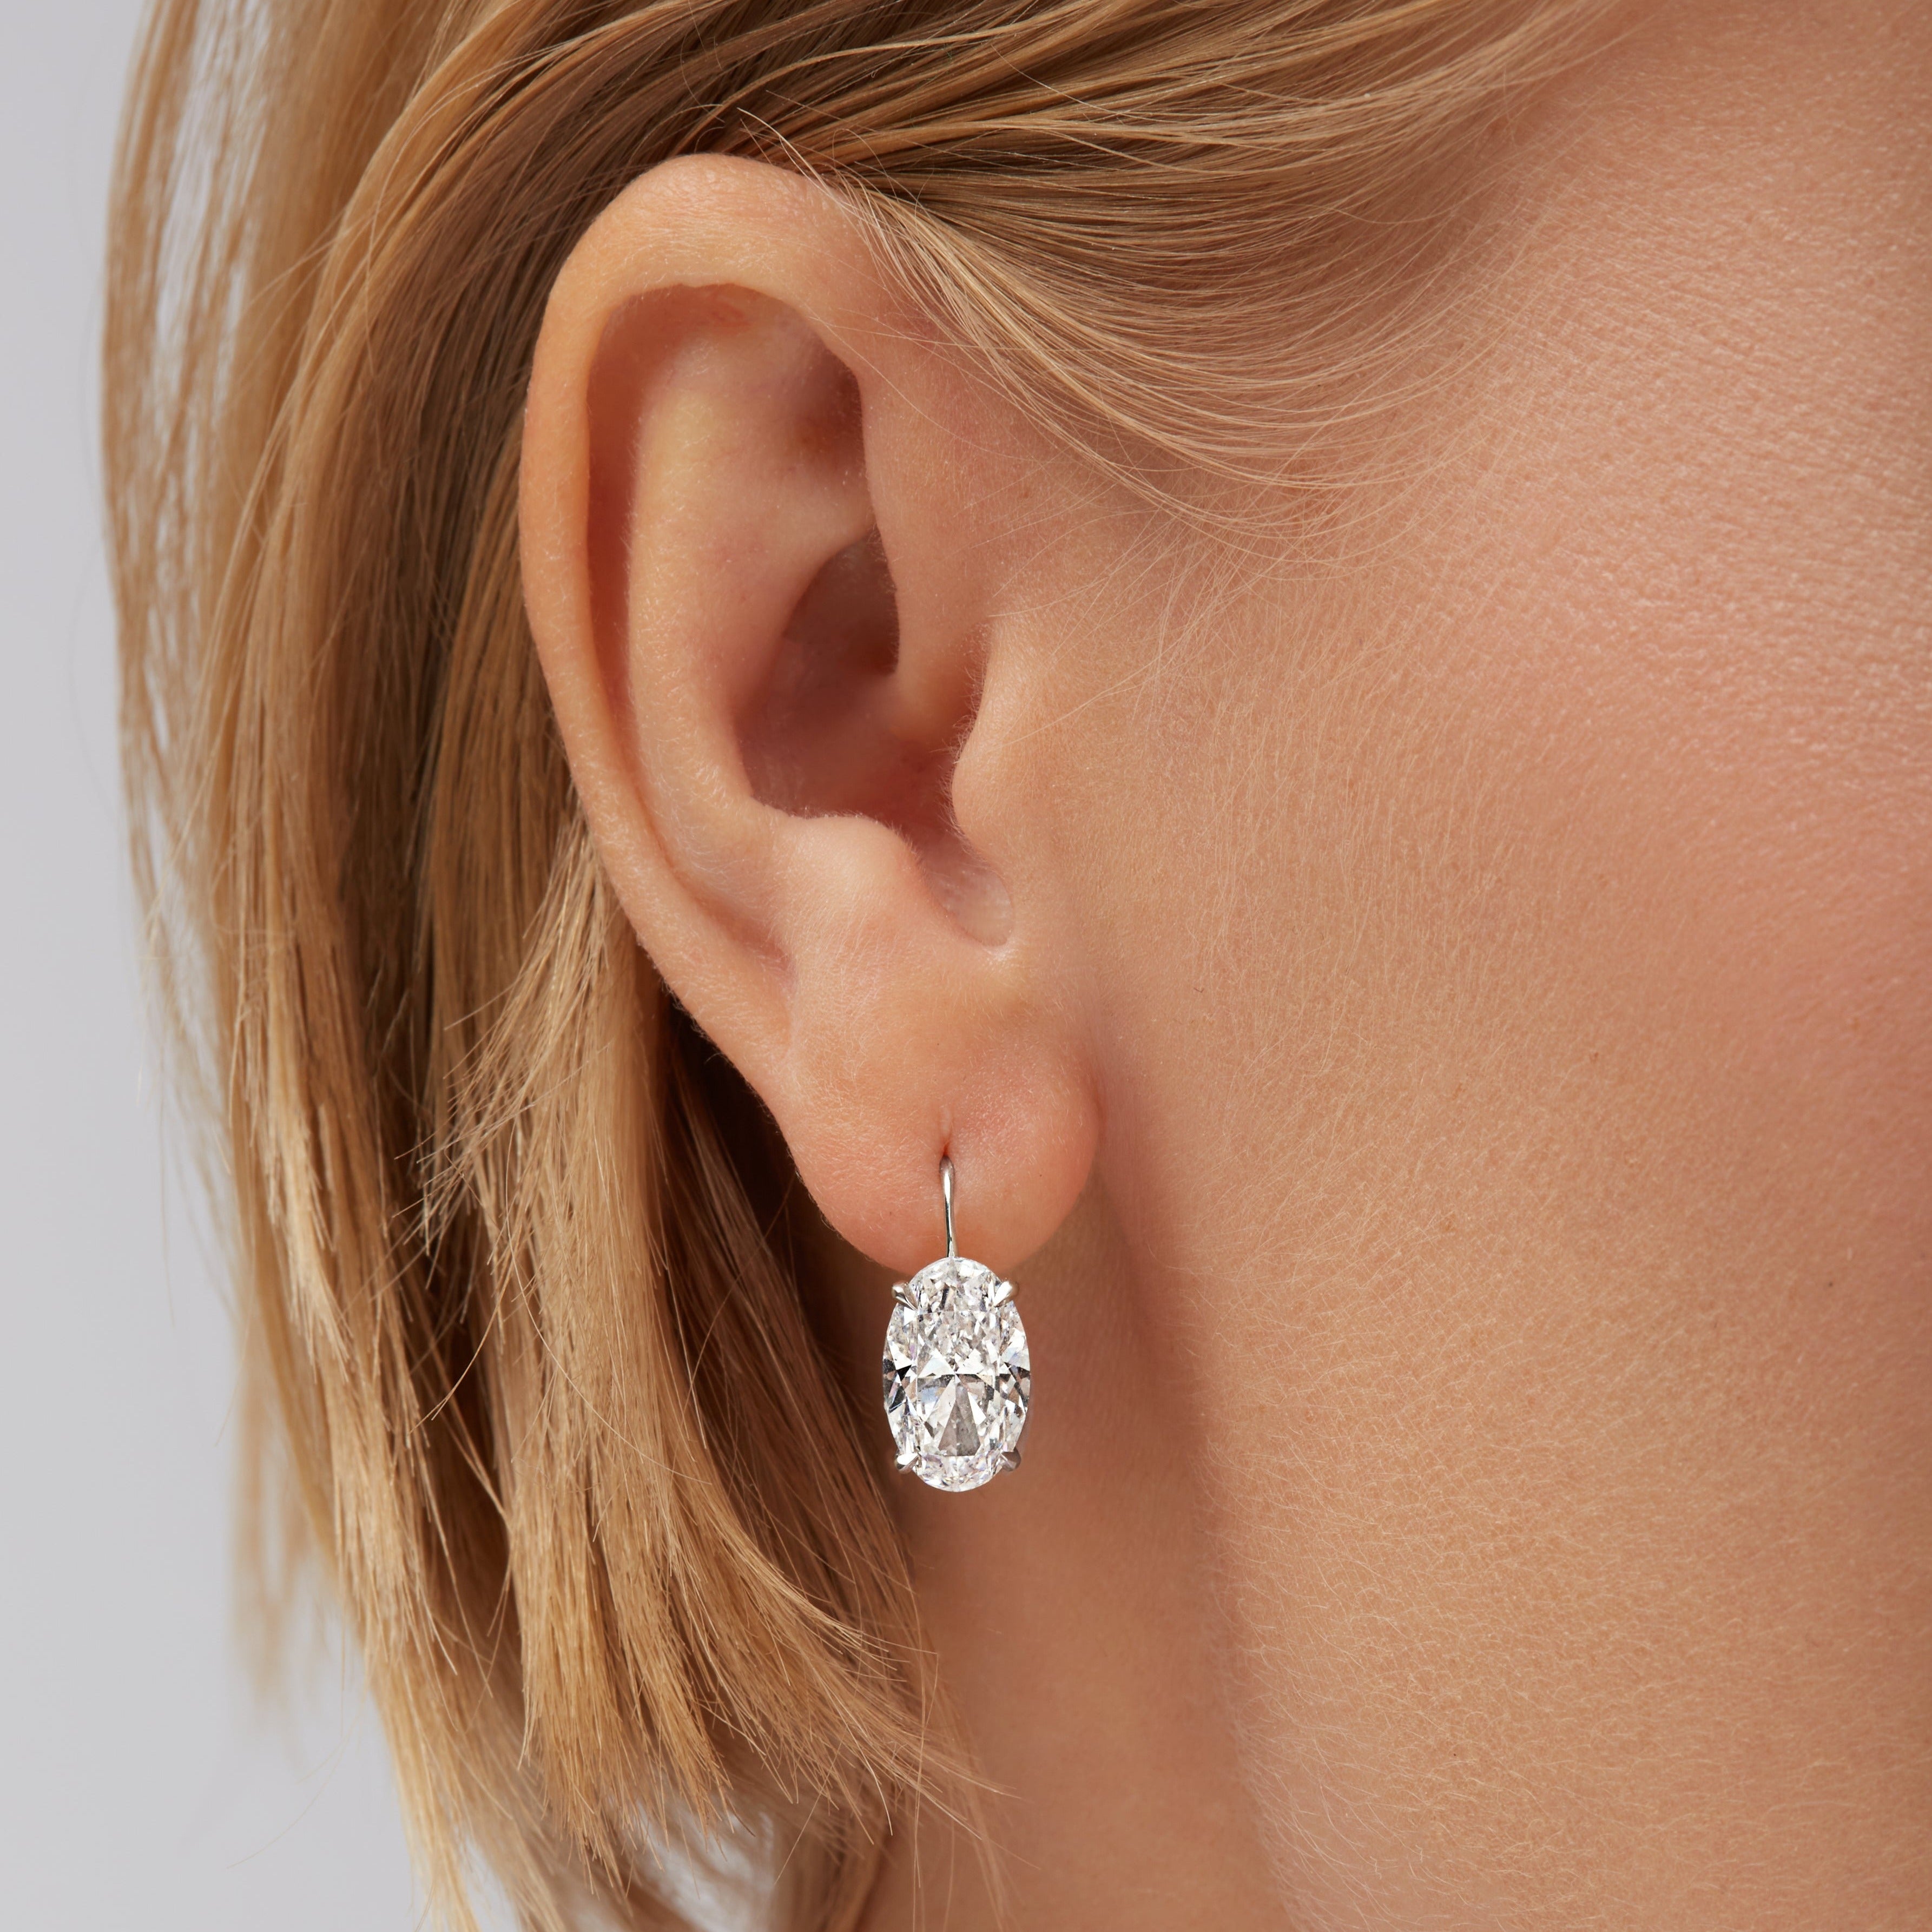 Oval Shaped Diamond Leverback Earrings in 18K White Gold, GIA Certified